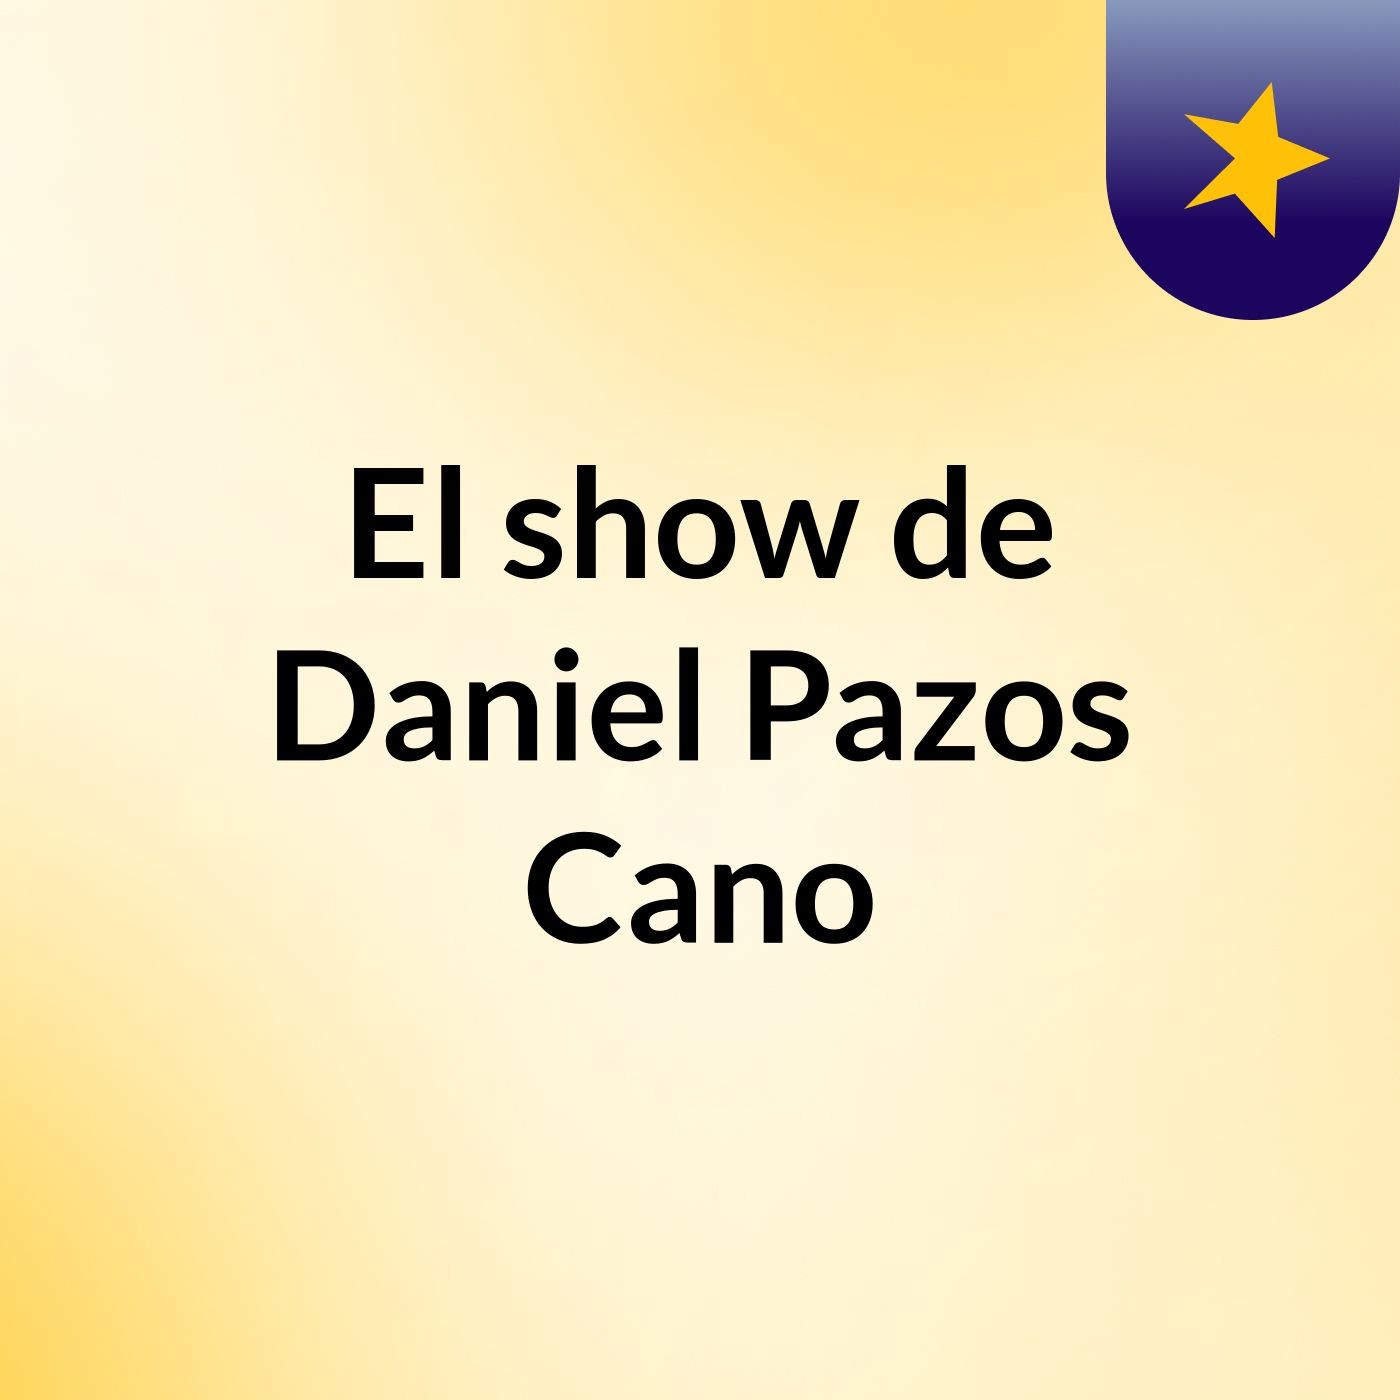 El show de Daniel Pazos Cano